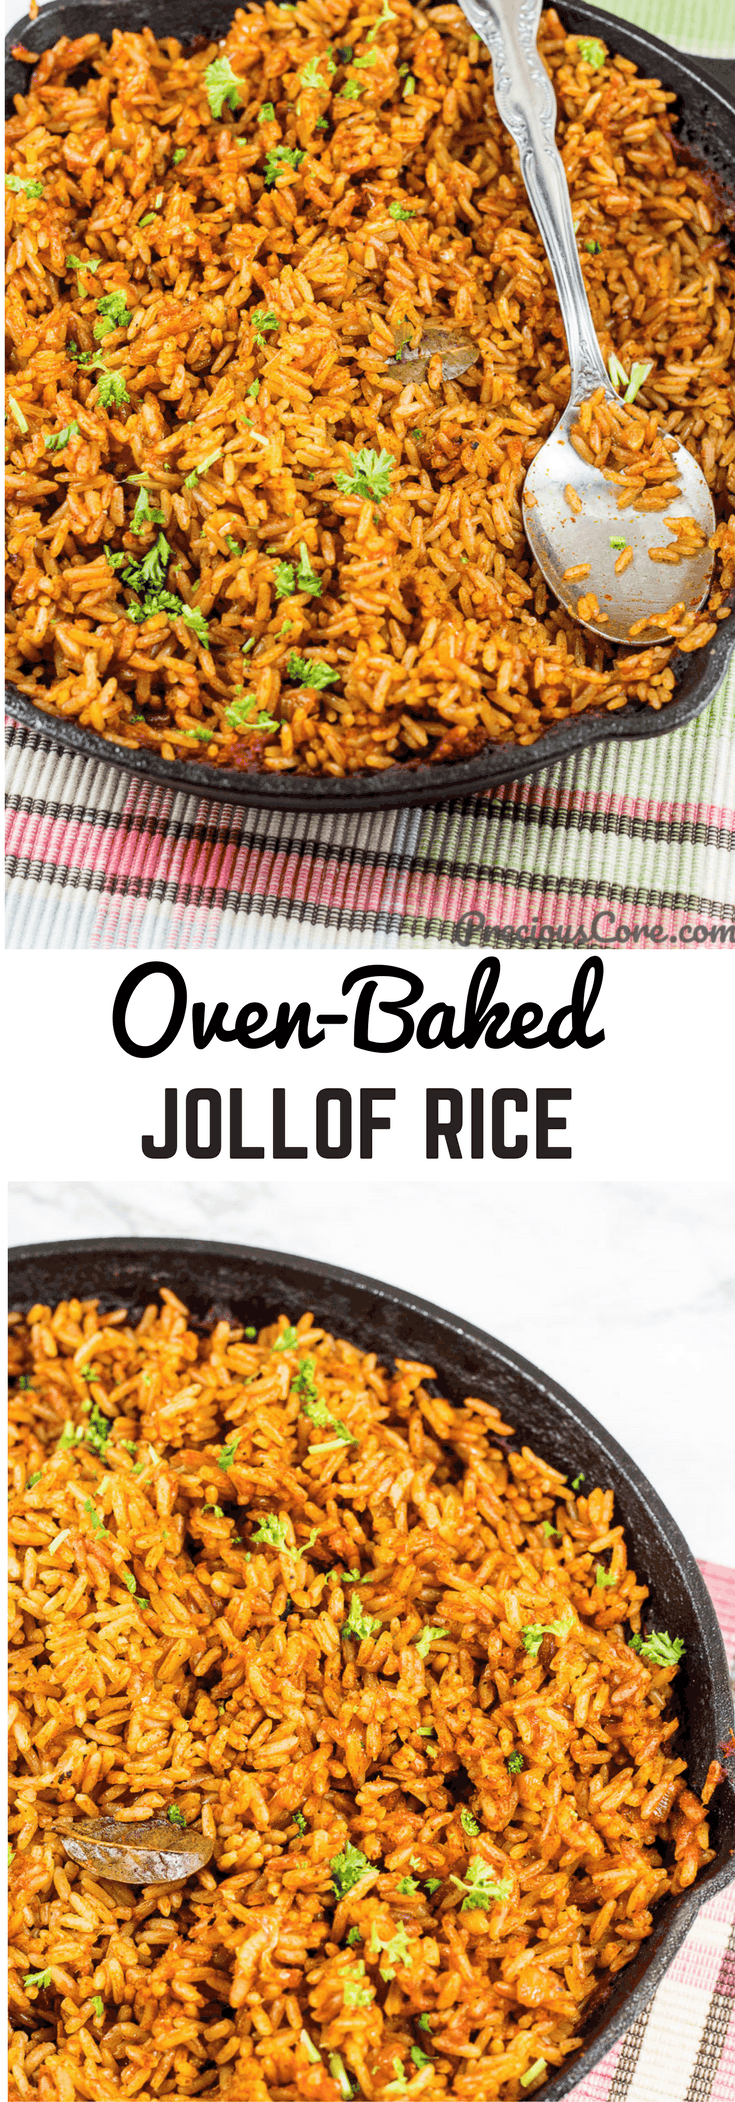 How to cook West African Jollof Rice right in your oven. Get the recipe on PreciousCore.com. #JollofRice #Dinner #Vegan